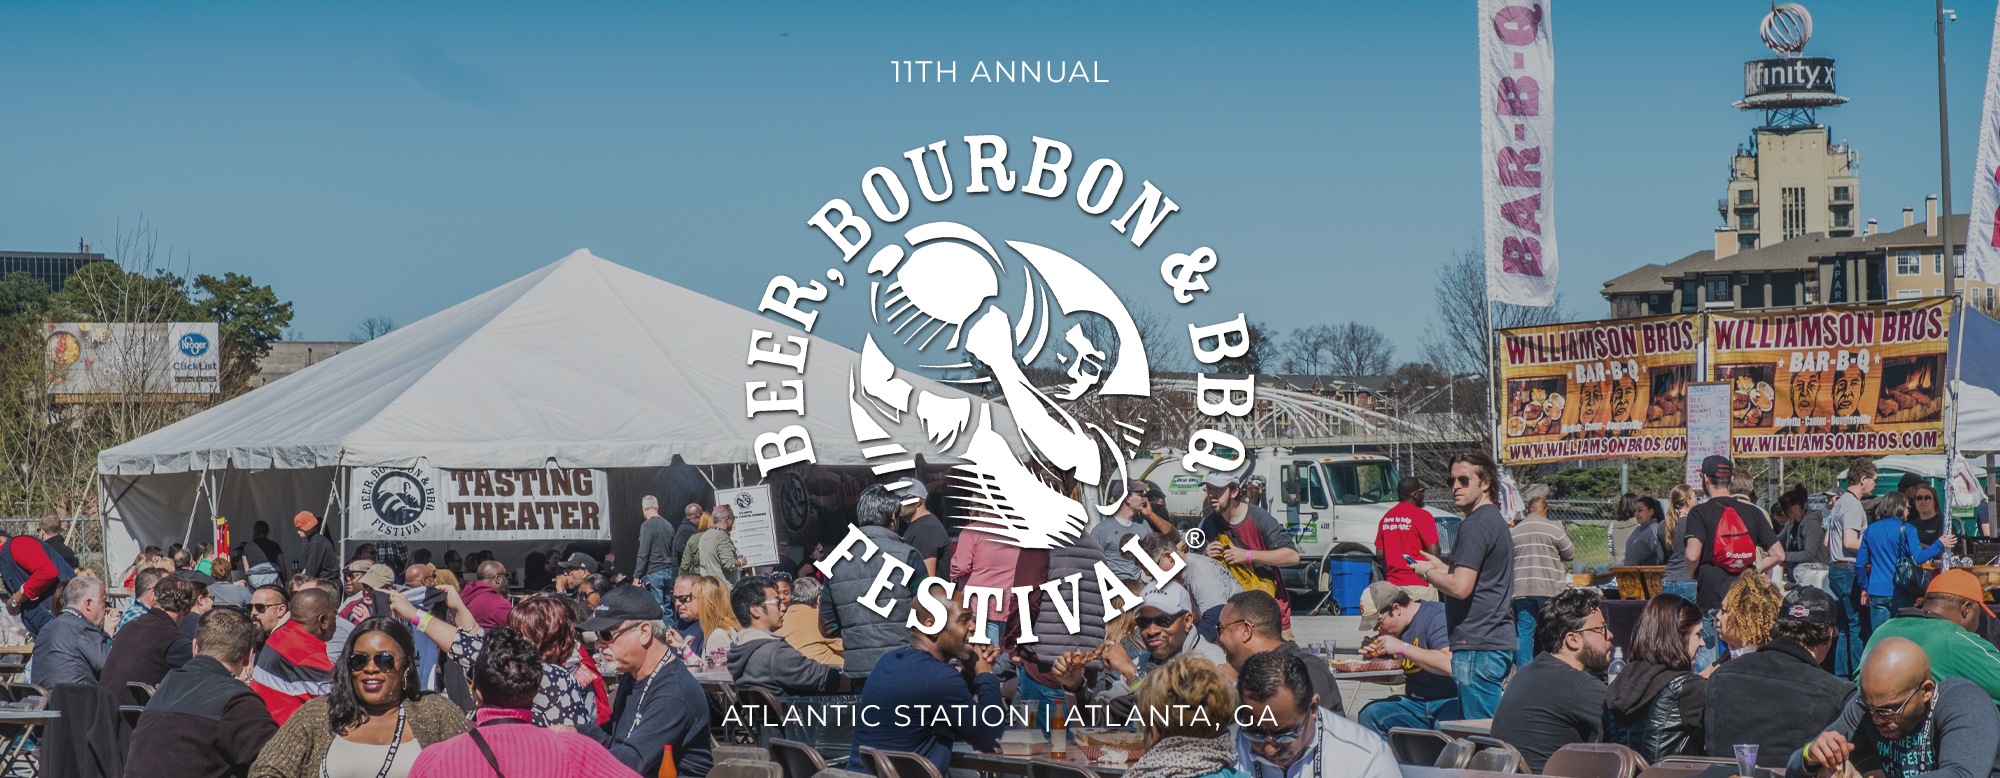 Beer, Bourbon & BBQ Festival Atlanta,